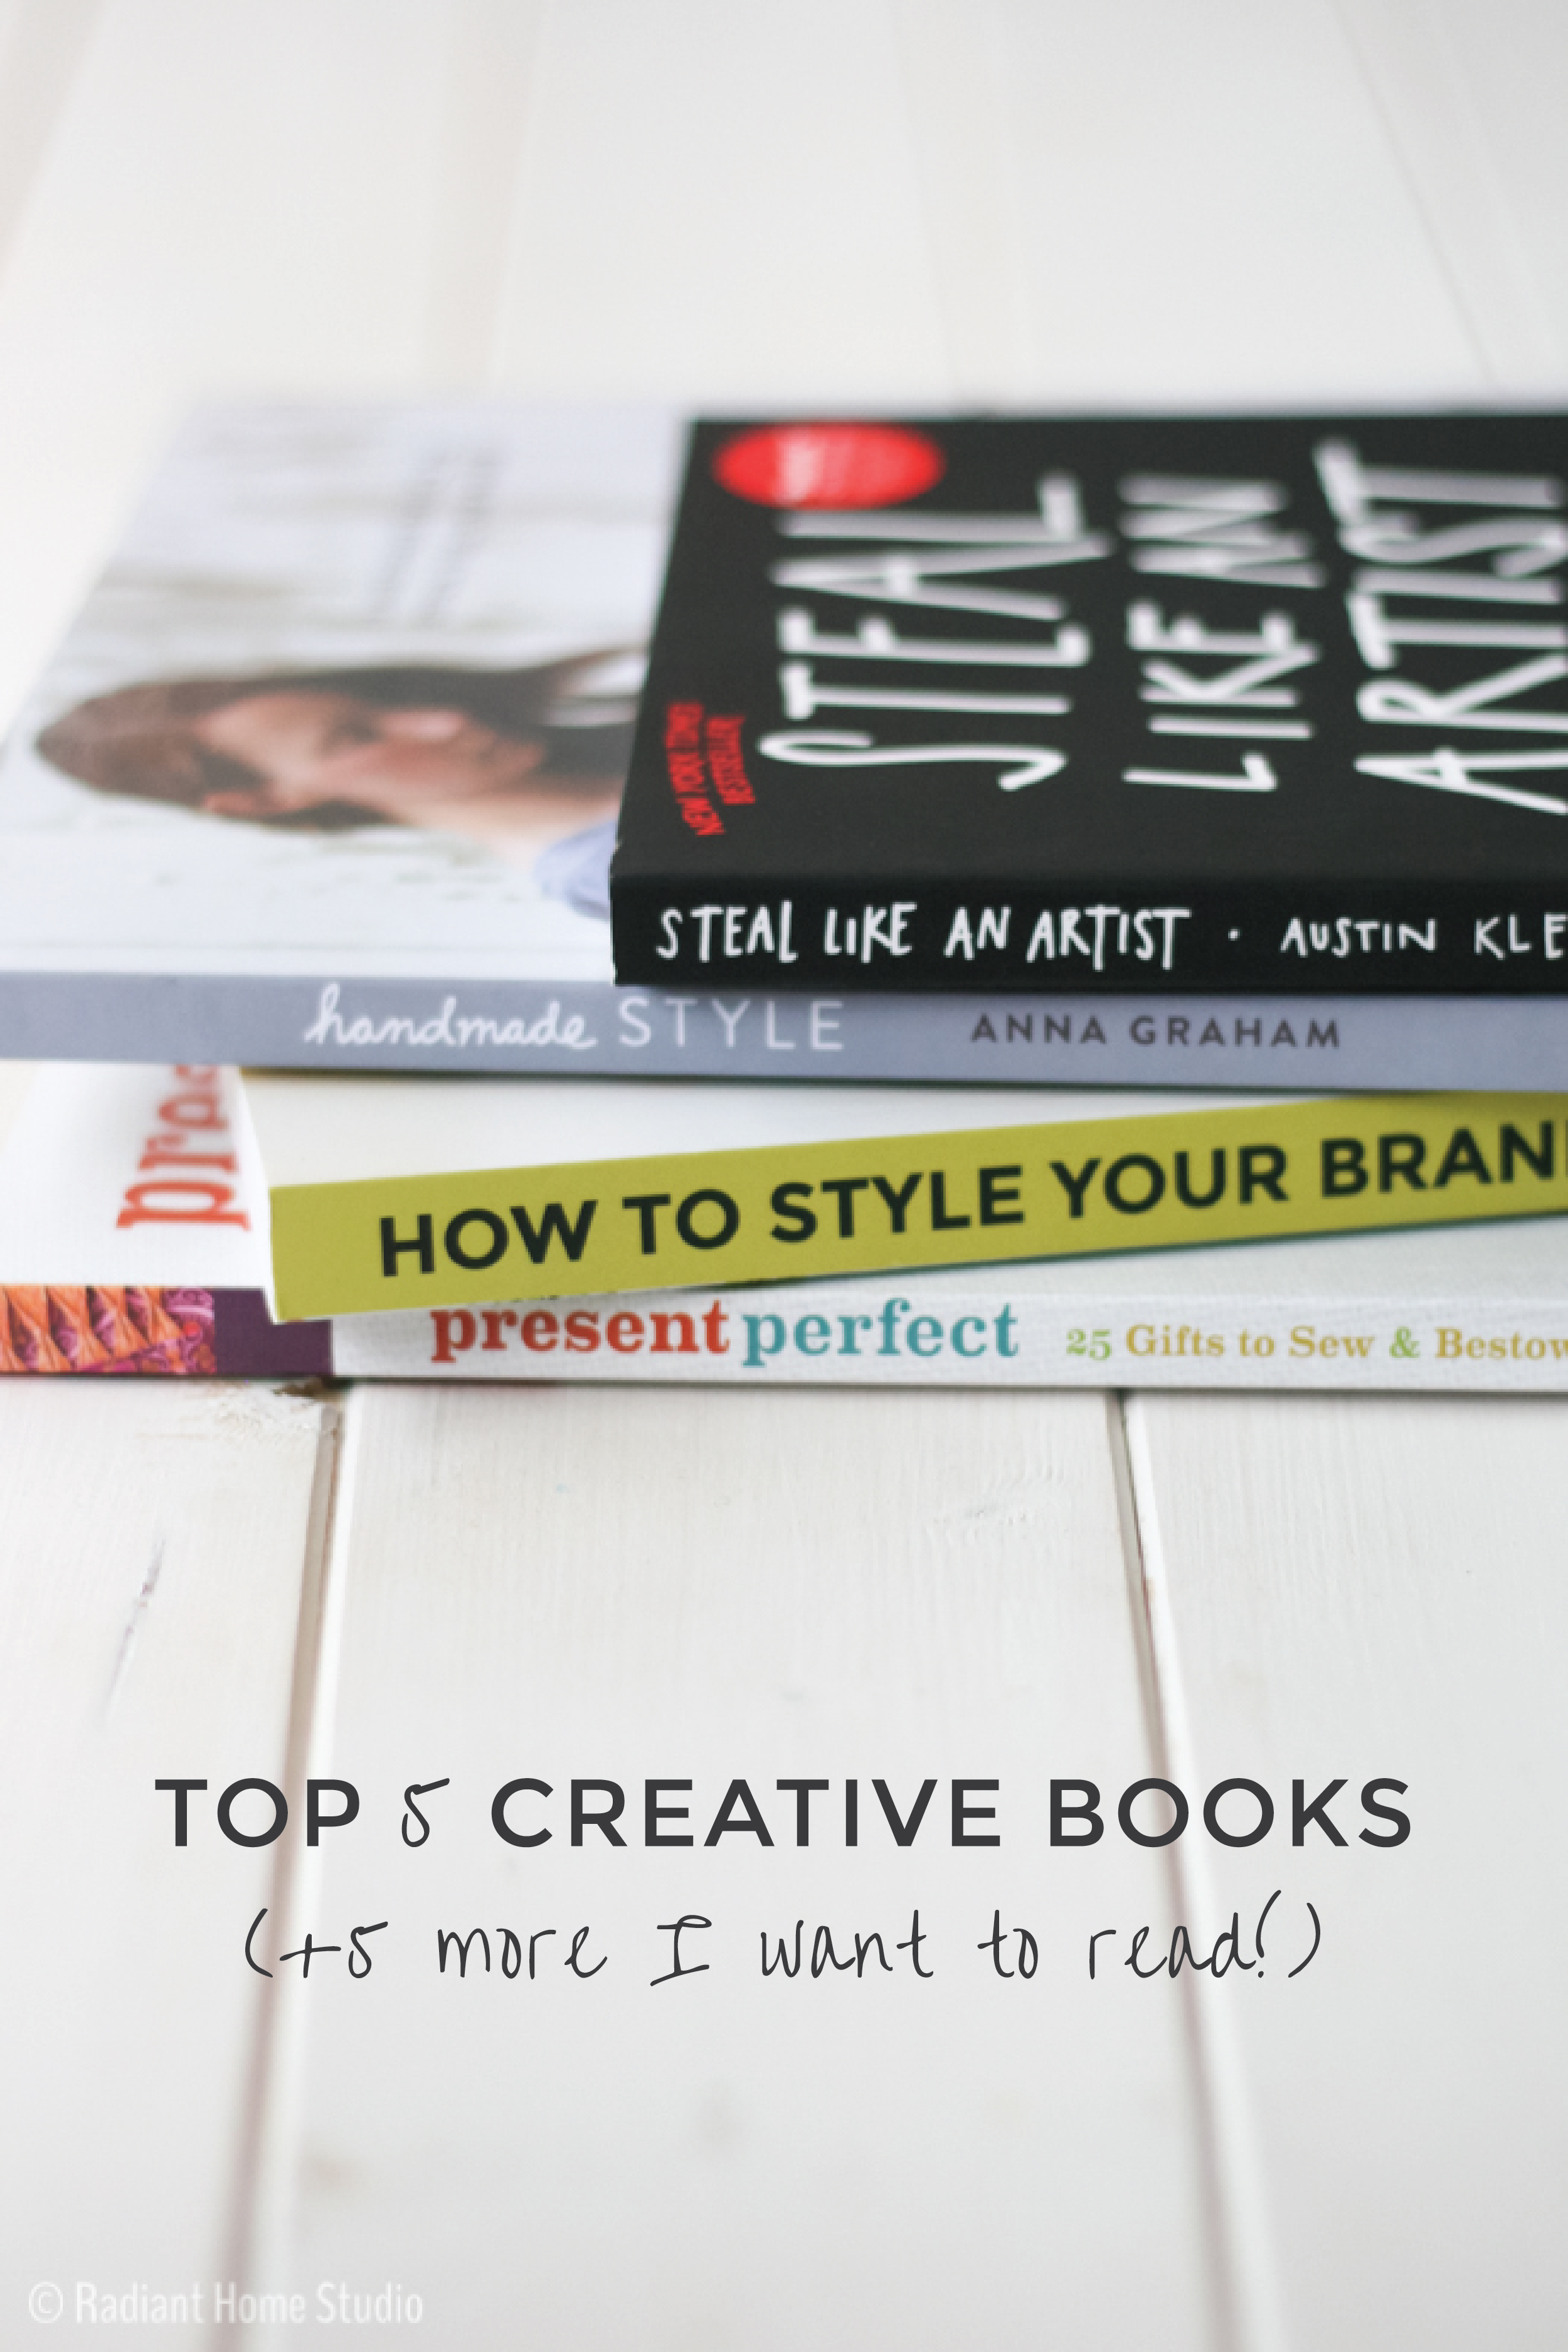 Creative Books| Sewing & Design Books Gift Guide | Radiant Home Studio